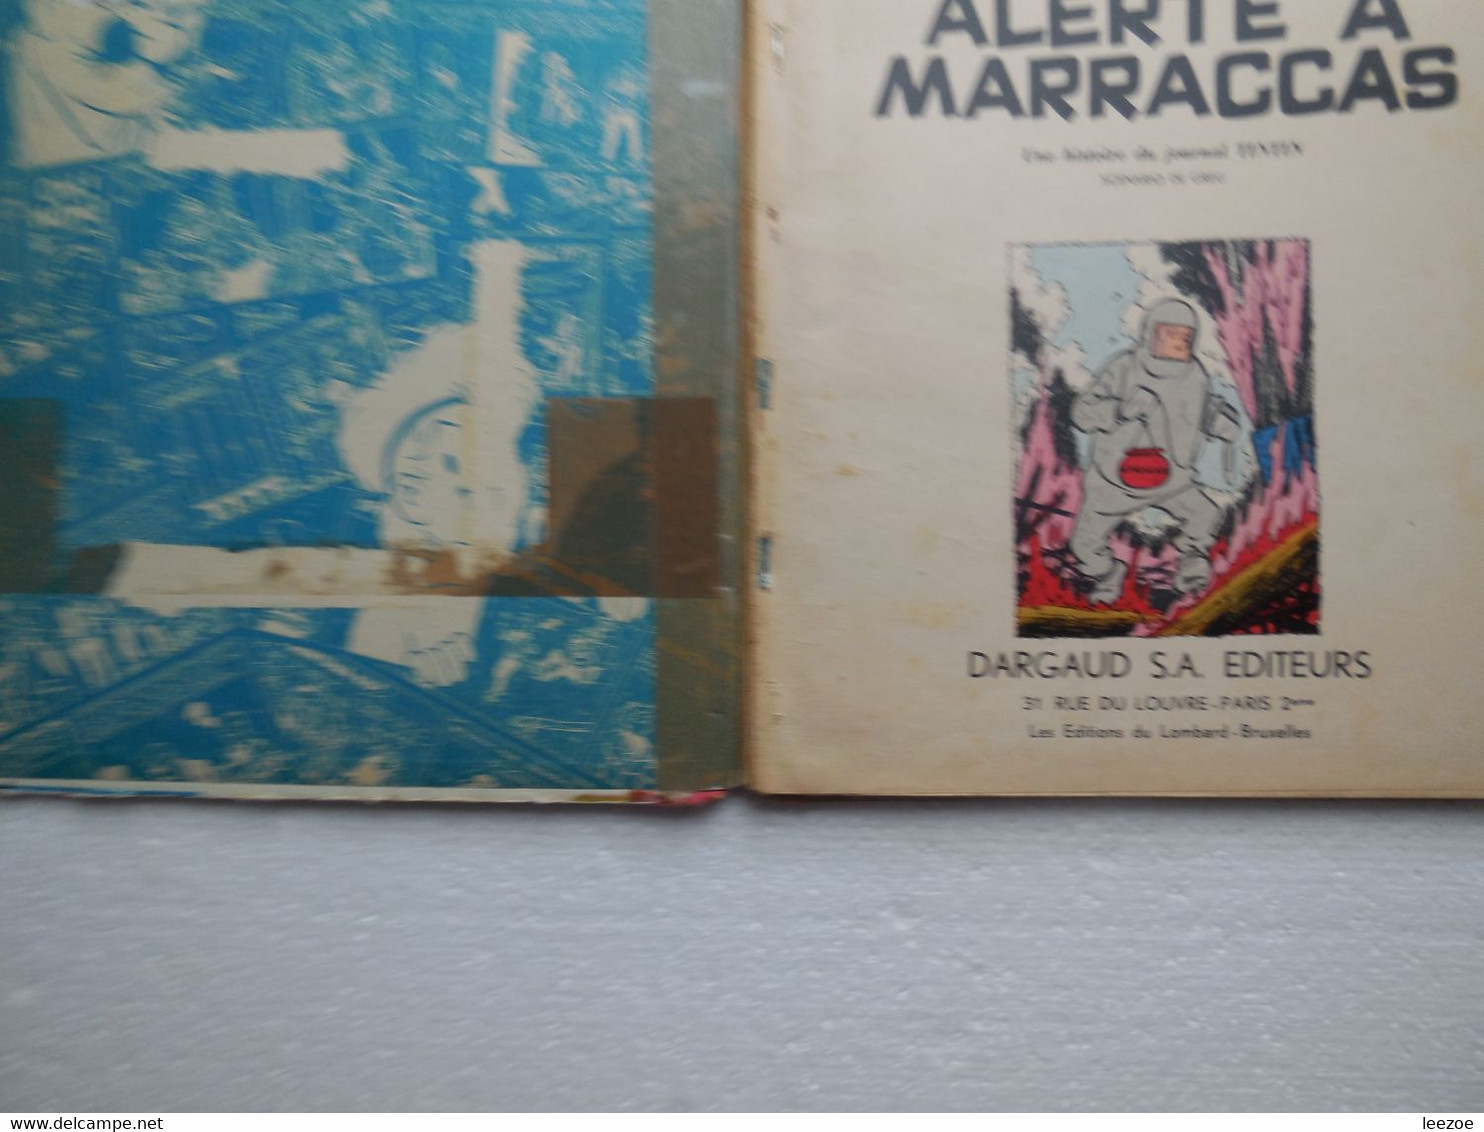 EO FRANCAISE BD Chick Bill (collection du Lombard)  Alerte à Marraccas, 1961....N5..4..02